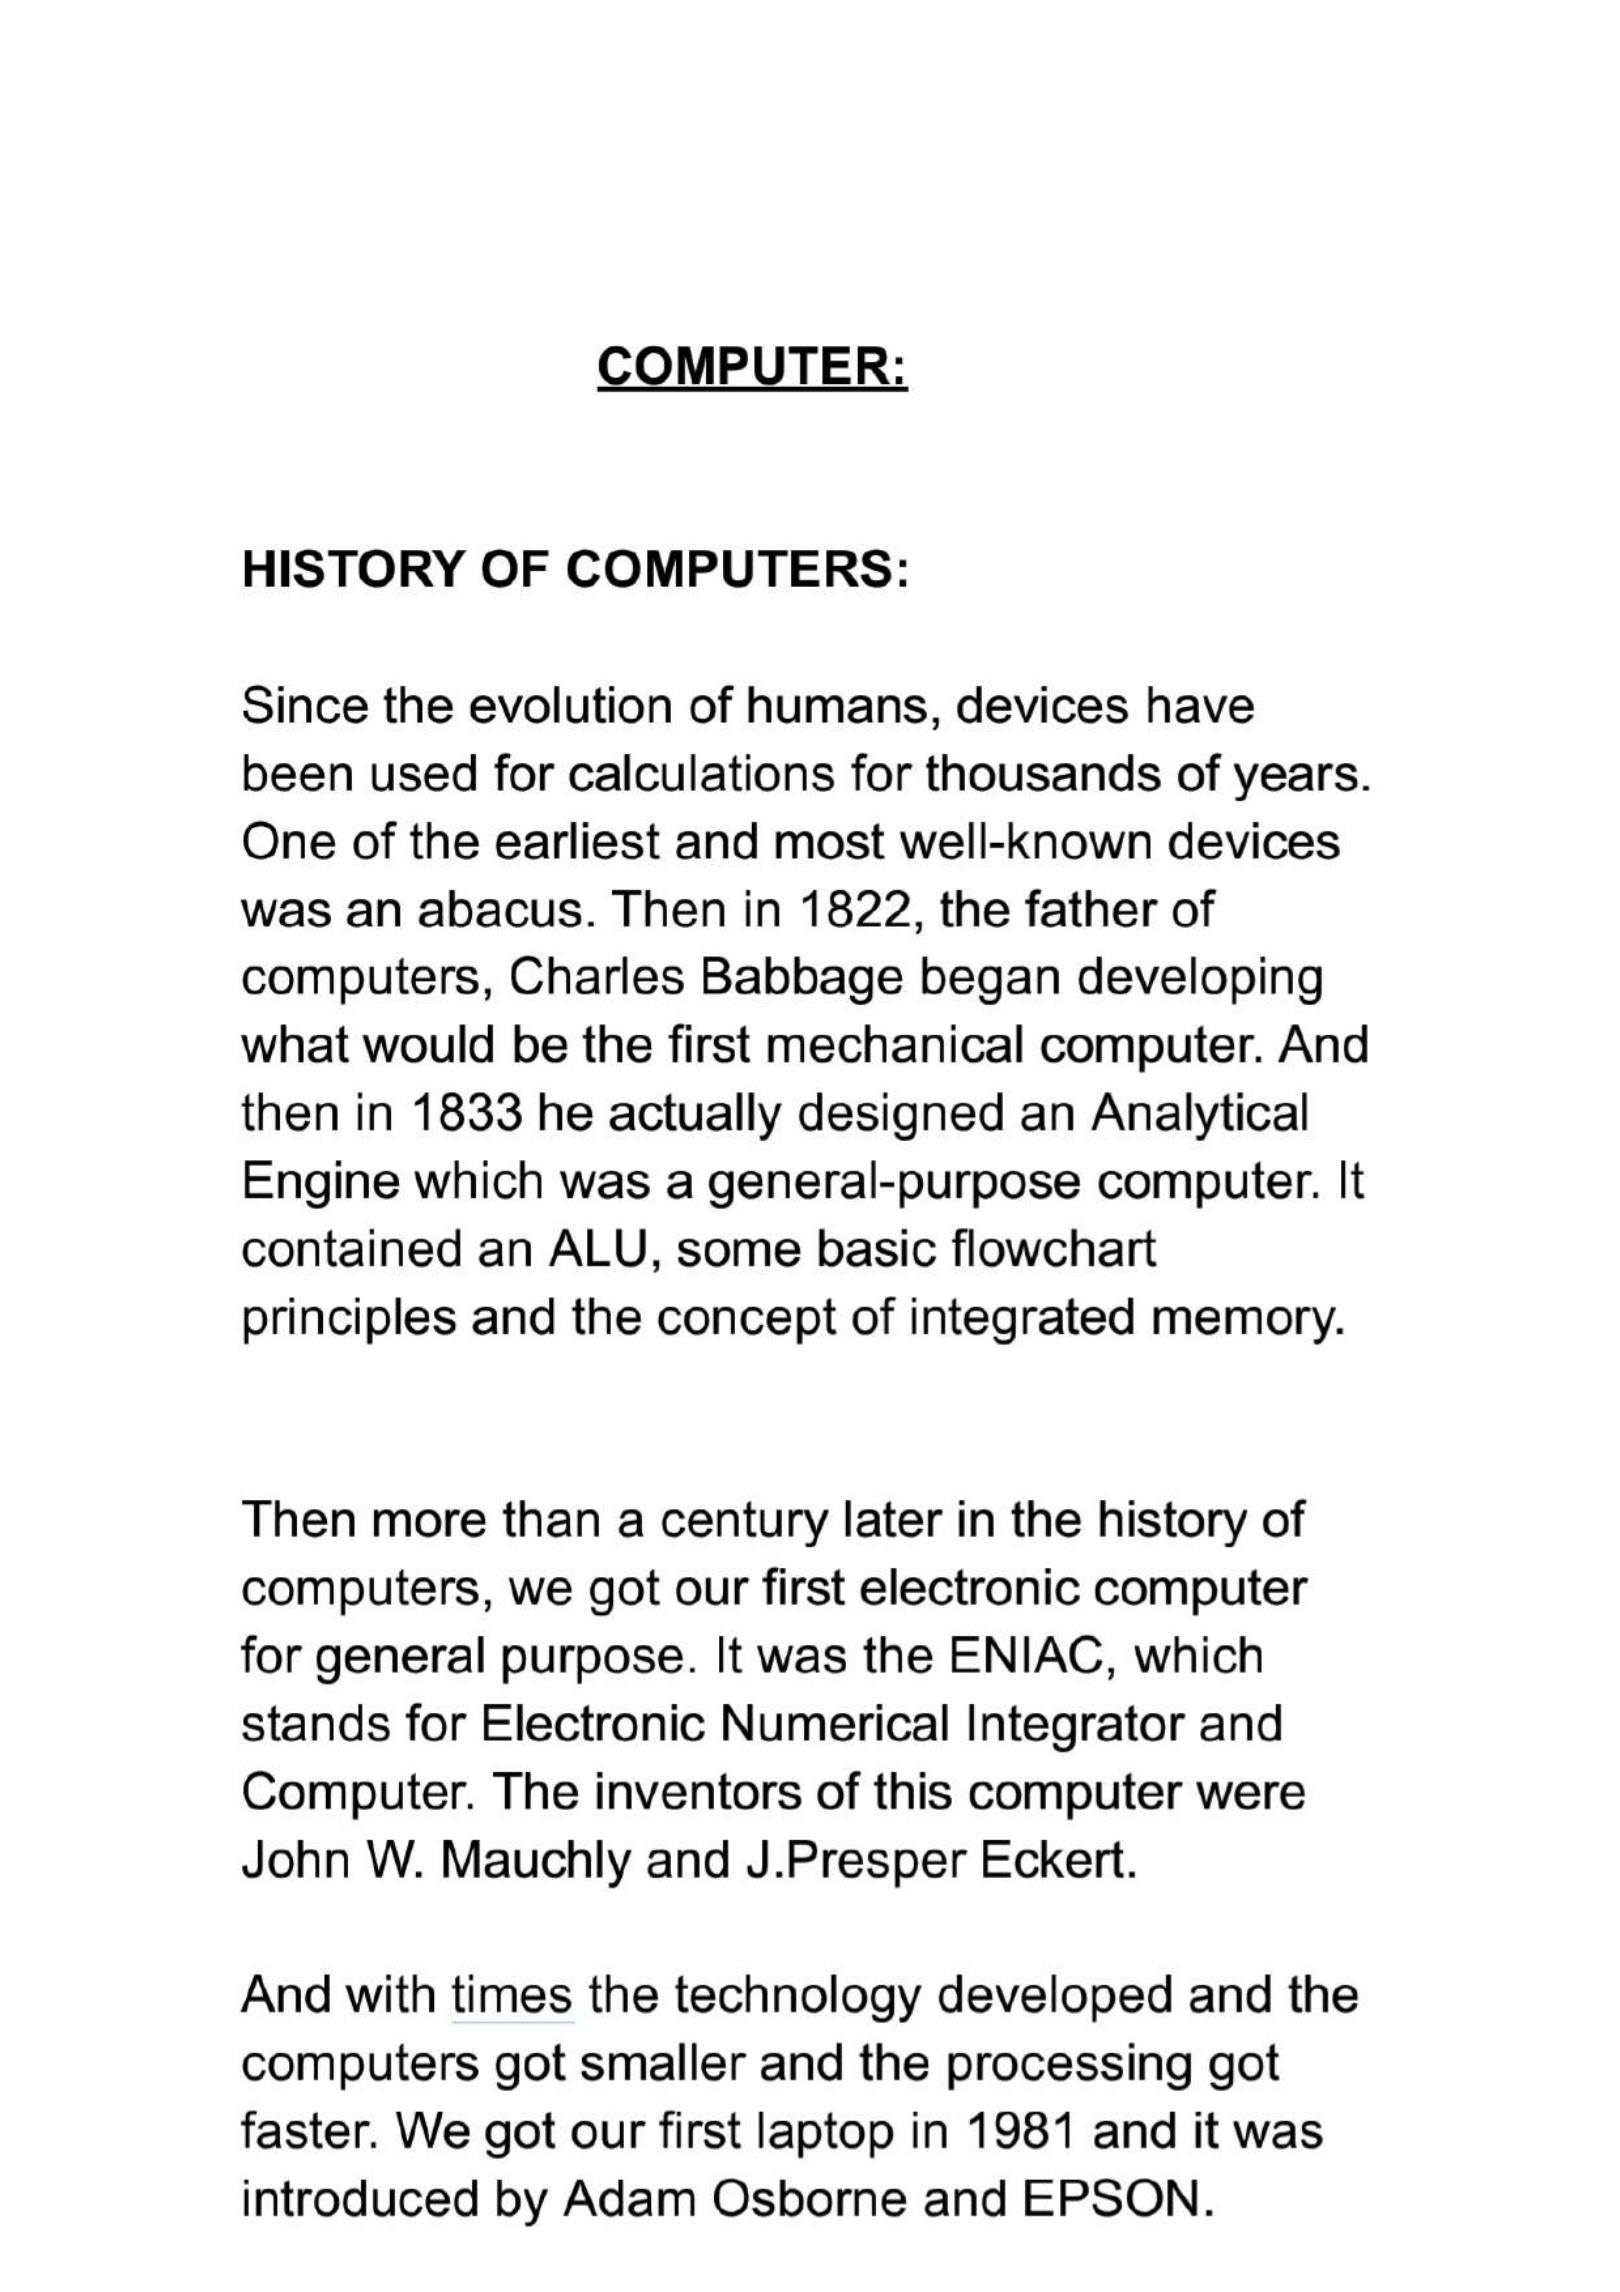 Computer Composition